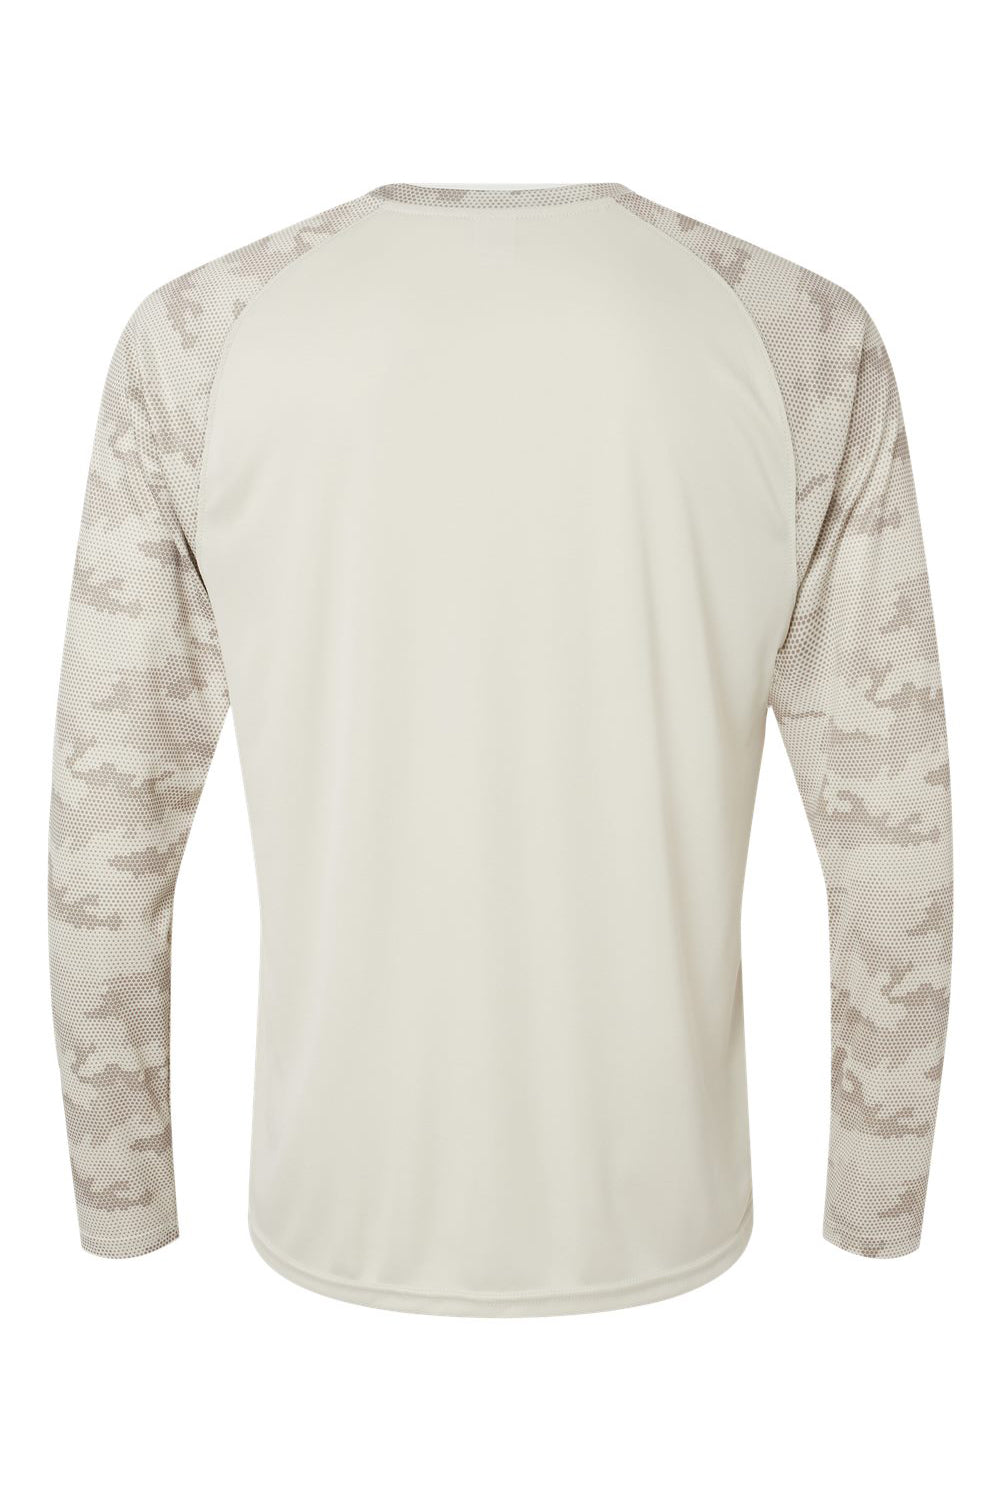 Paragon 216 Mens Cayman Performance Camo Colorblocked Long Sleeve Crewneck T-Shirt Sand Flat Back